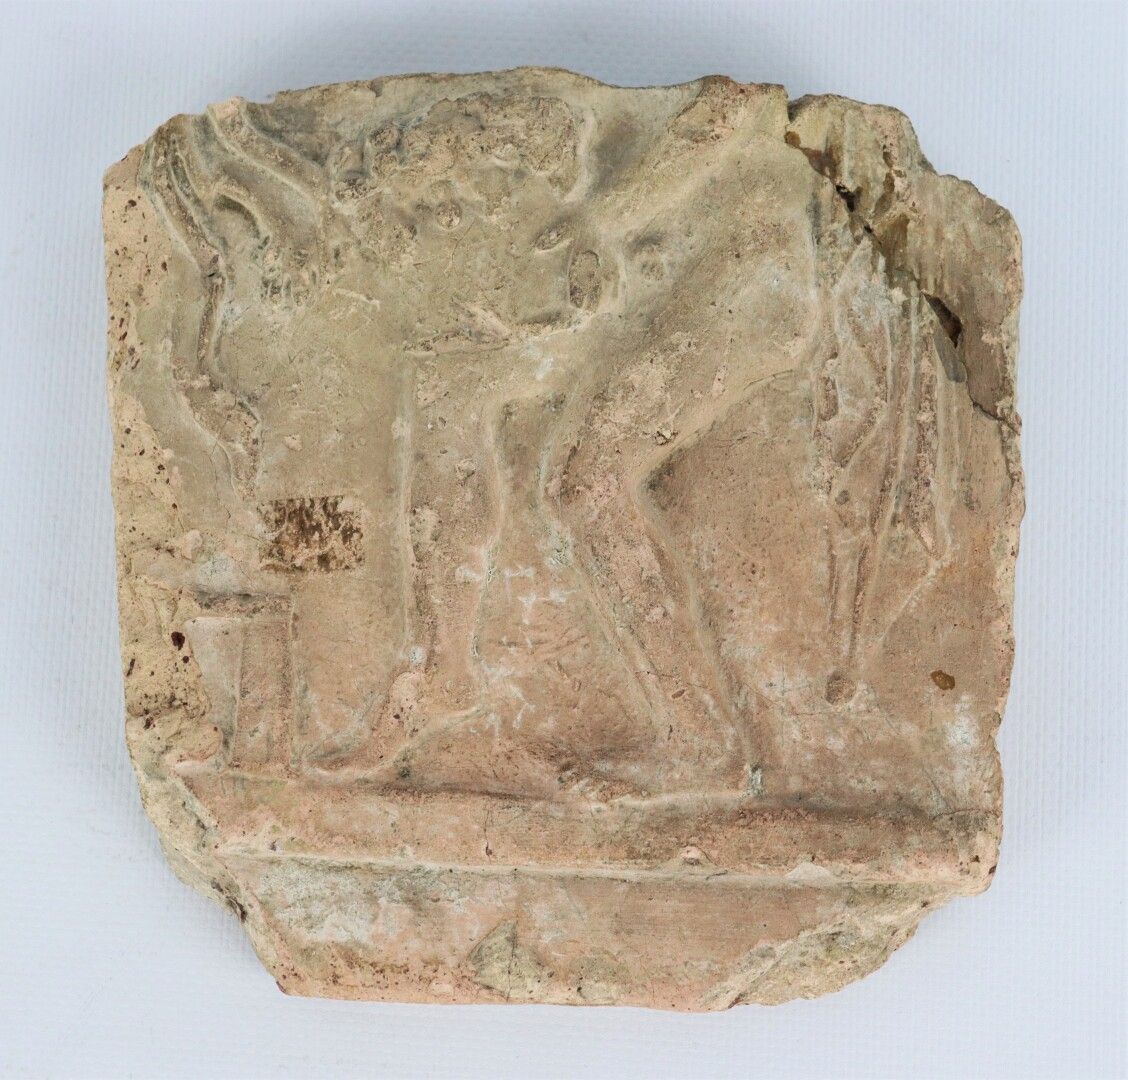 Null Fragmento de una urna funeraria etrusca.

H_15,8 cm W_15,8 cm